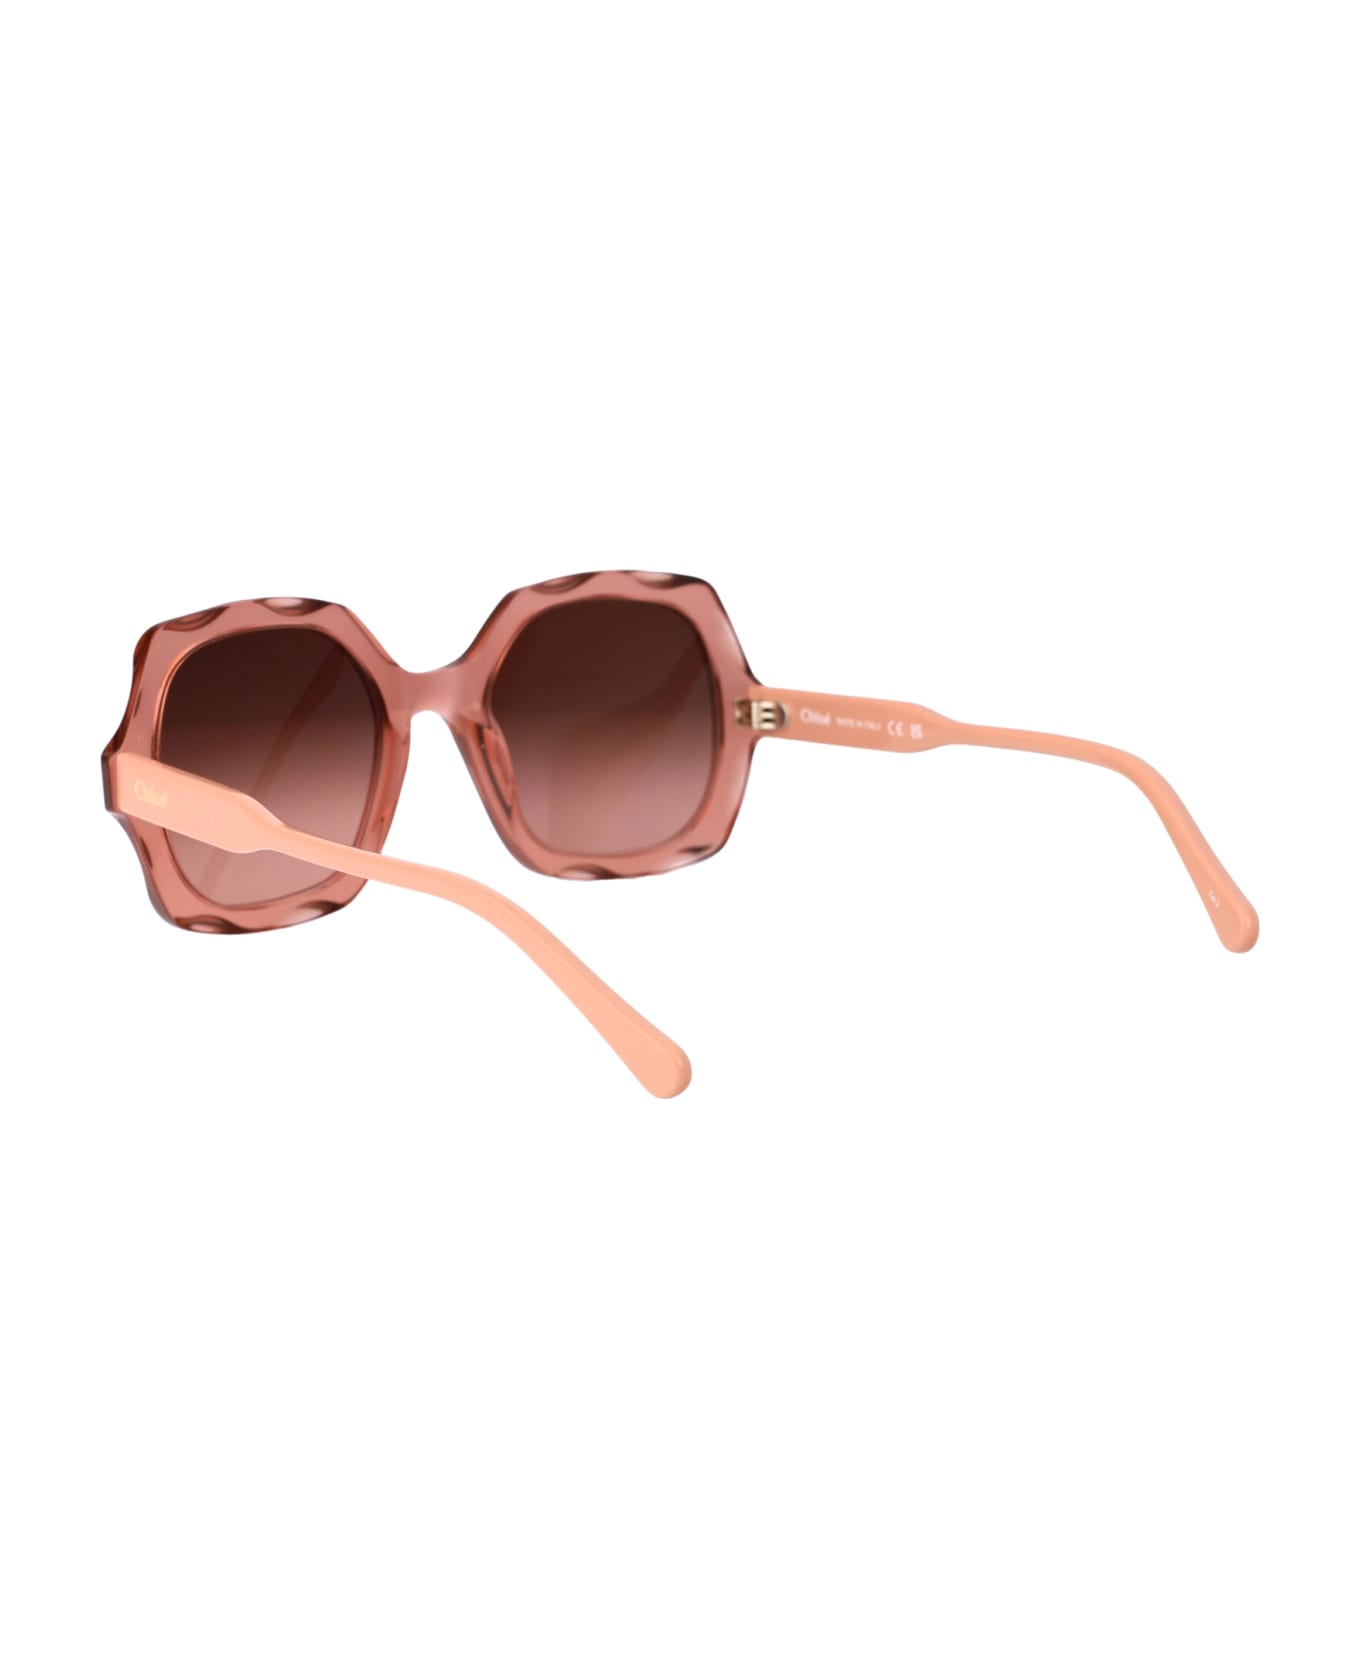 Chloé Eyewear Ch0226s Sunglasses - 003 BROWN PINK COPPER